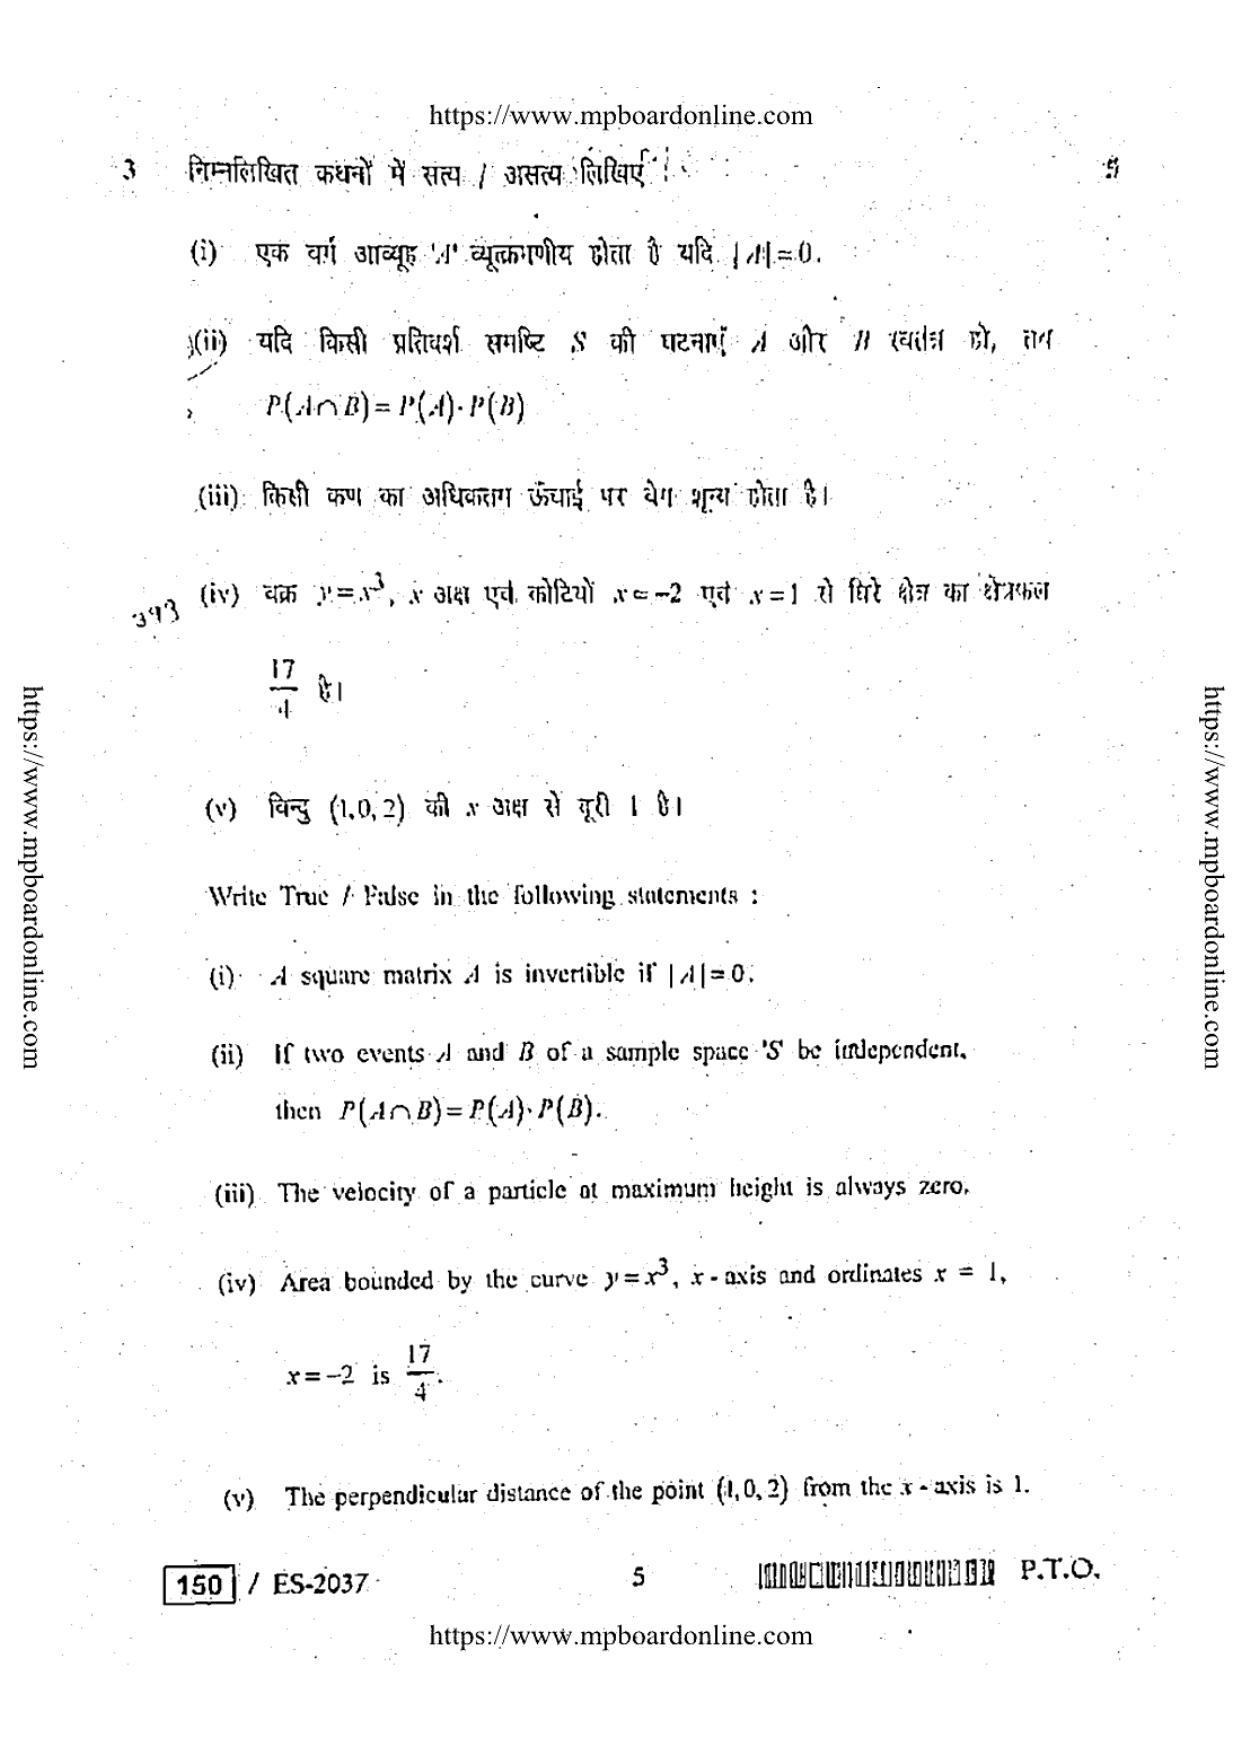 MP Board Class 12 Mathematica 2019 Question Paper - Page 4